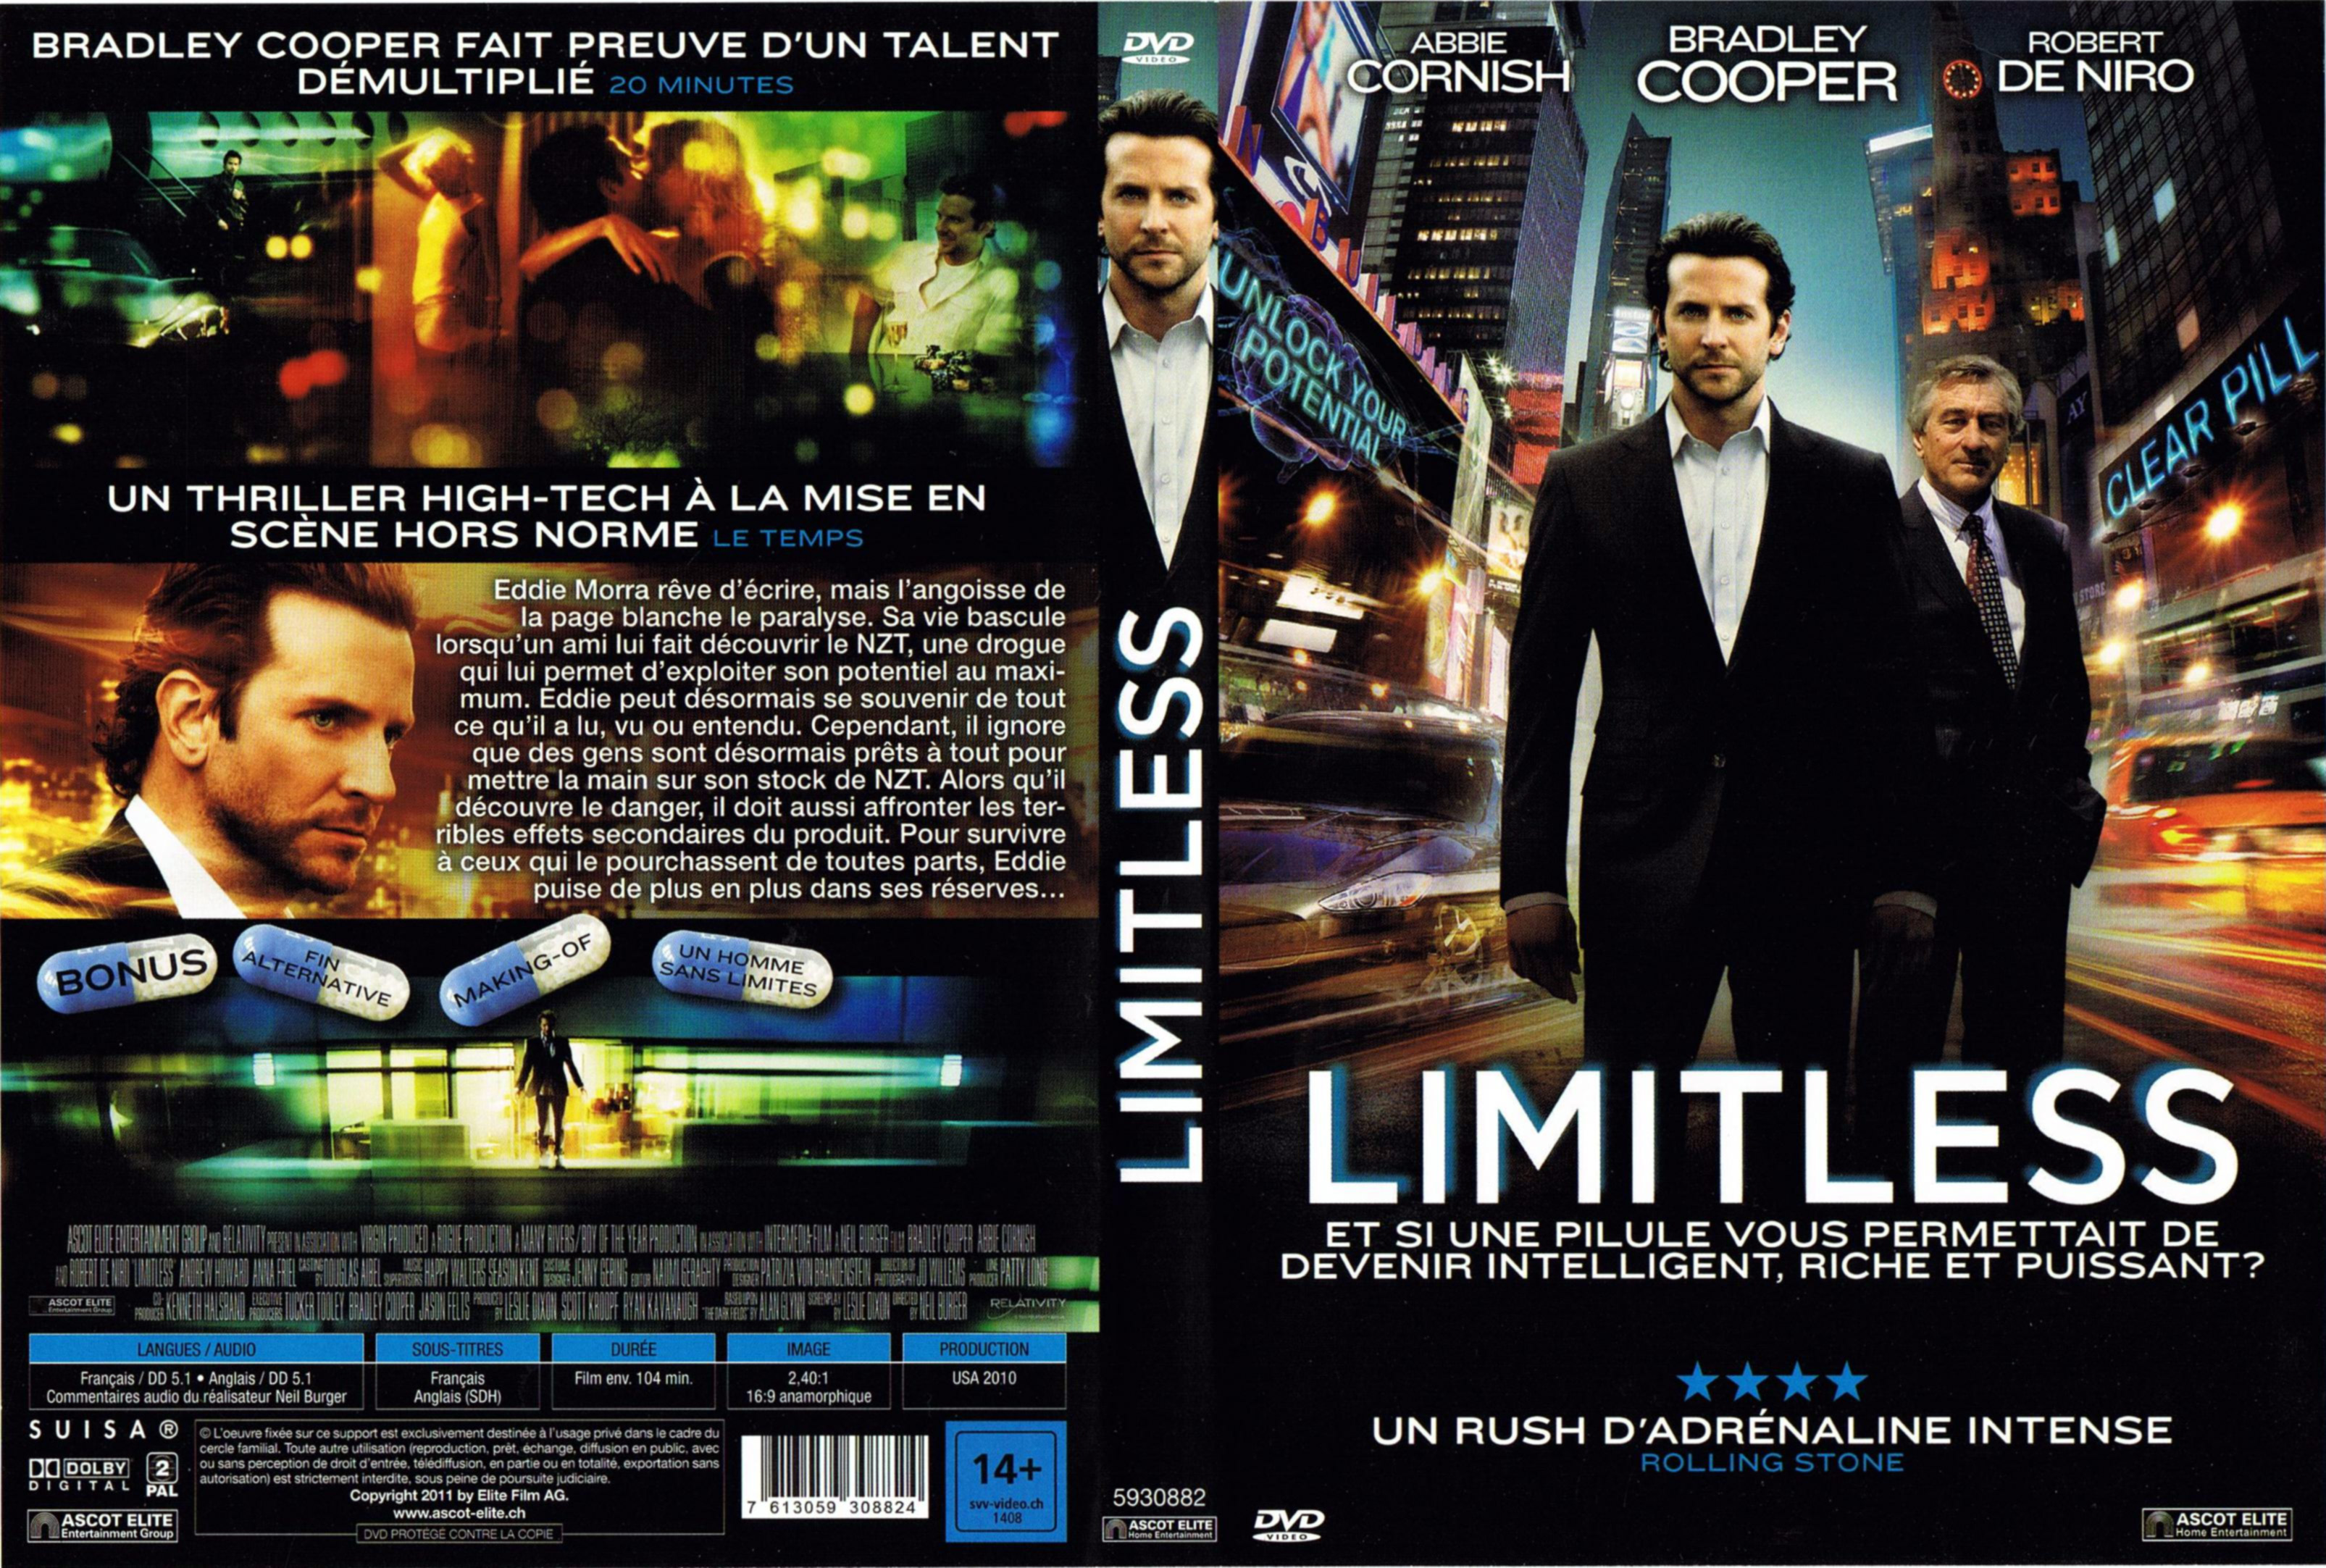 Jaquette DVD Limitless v2